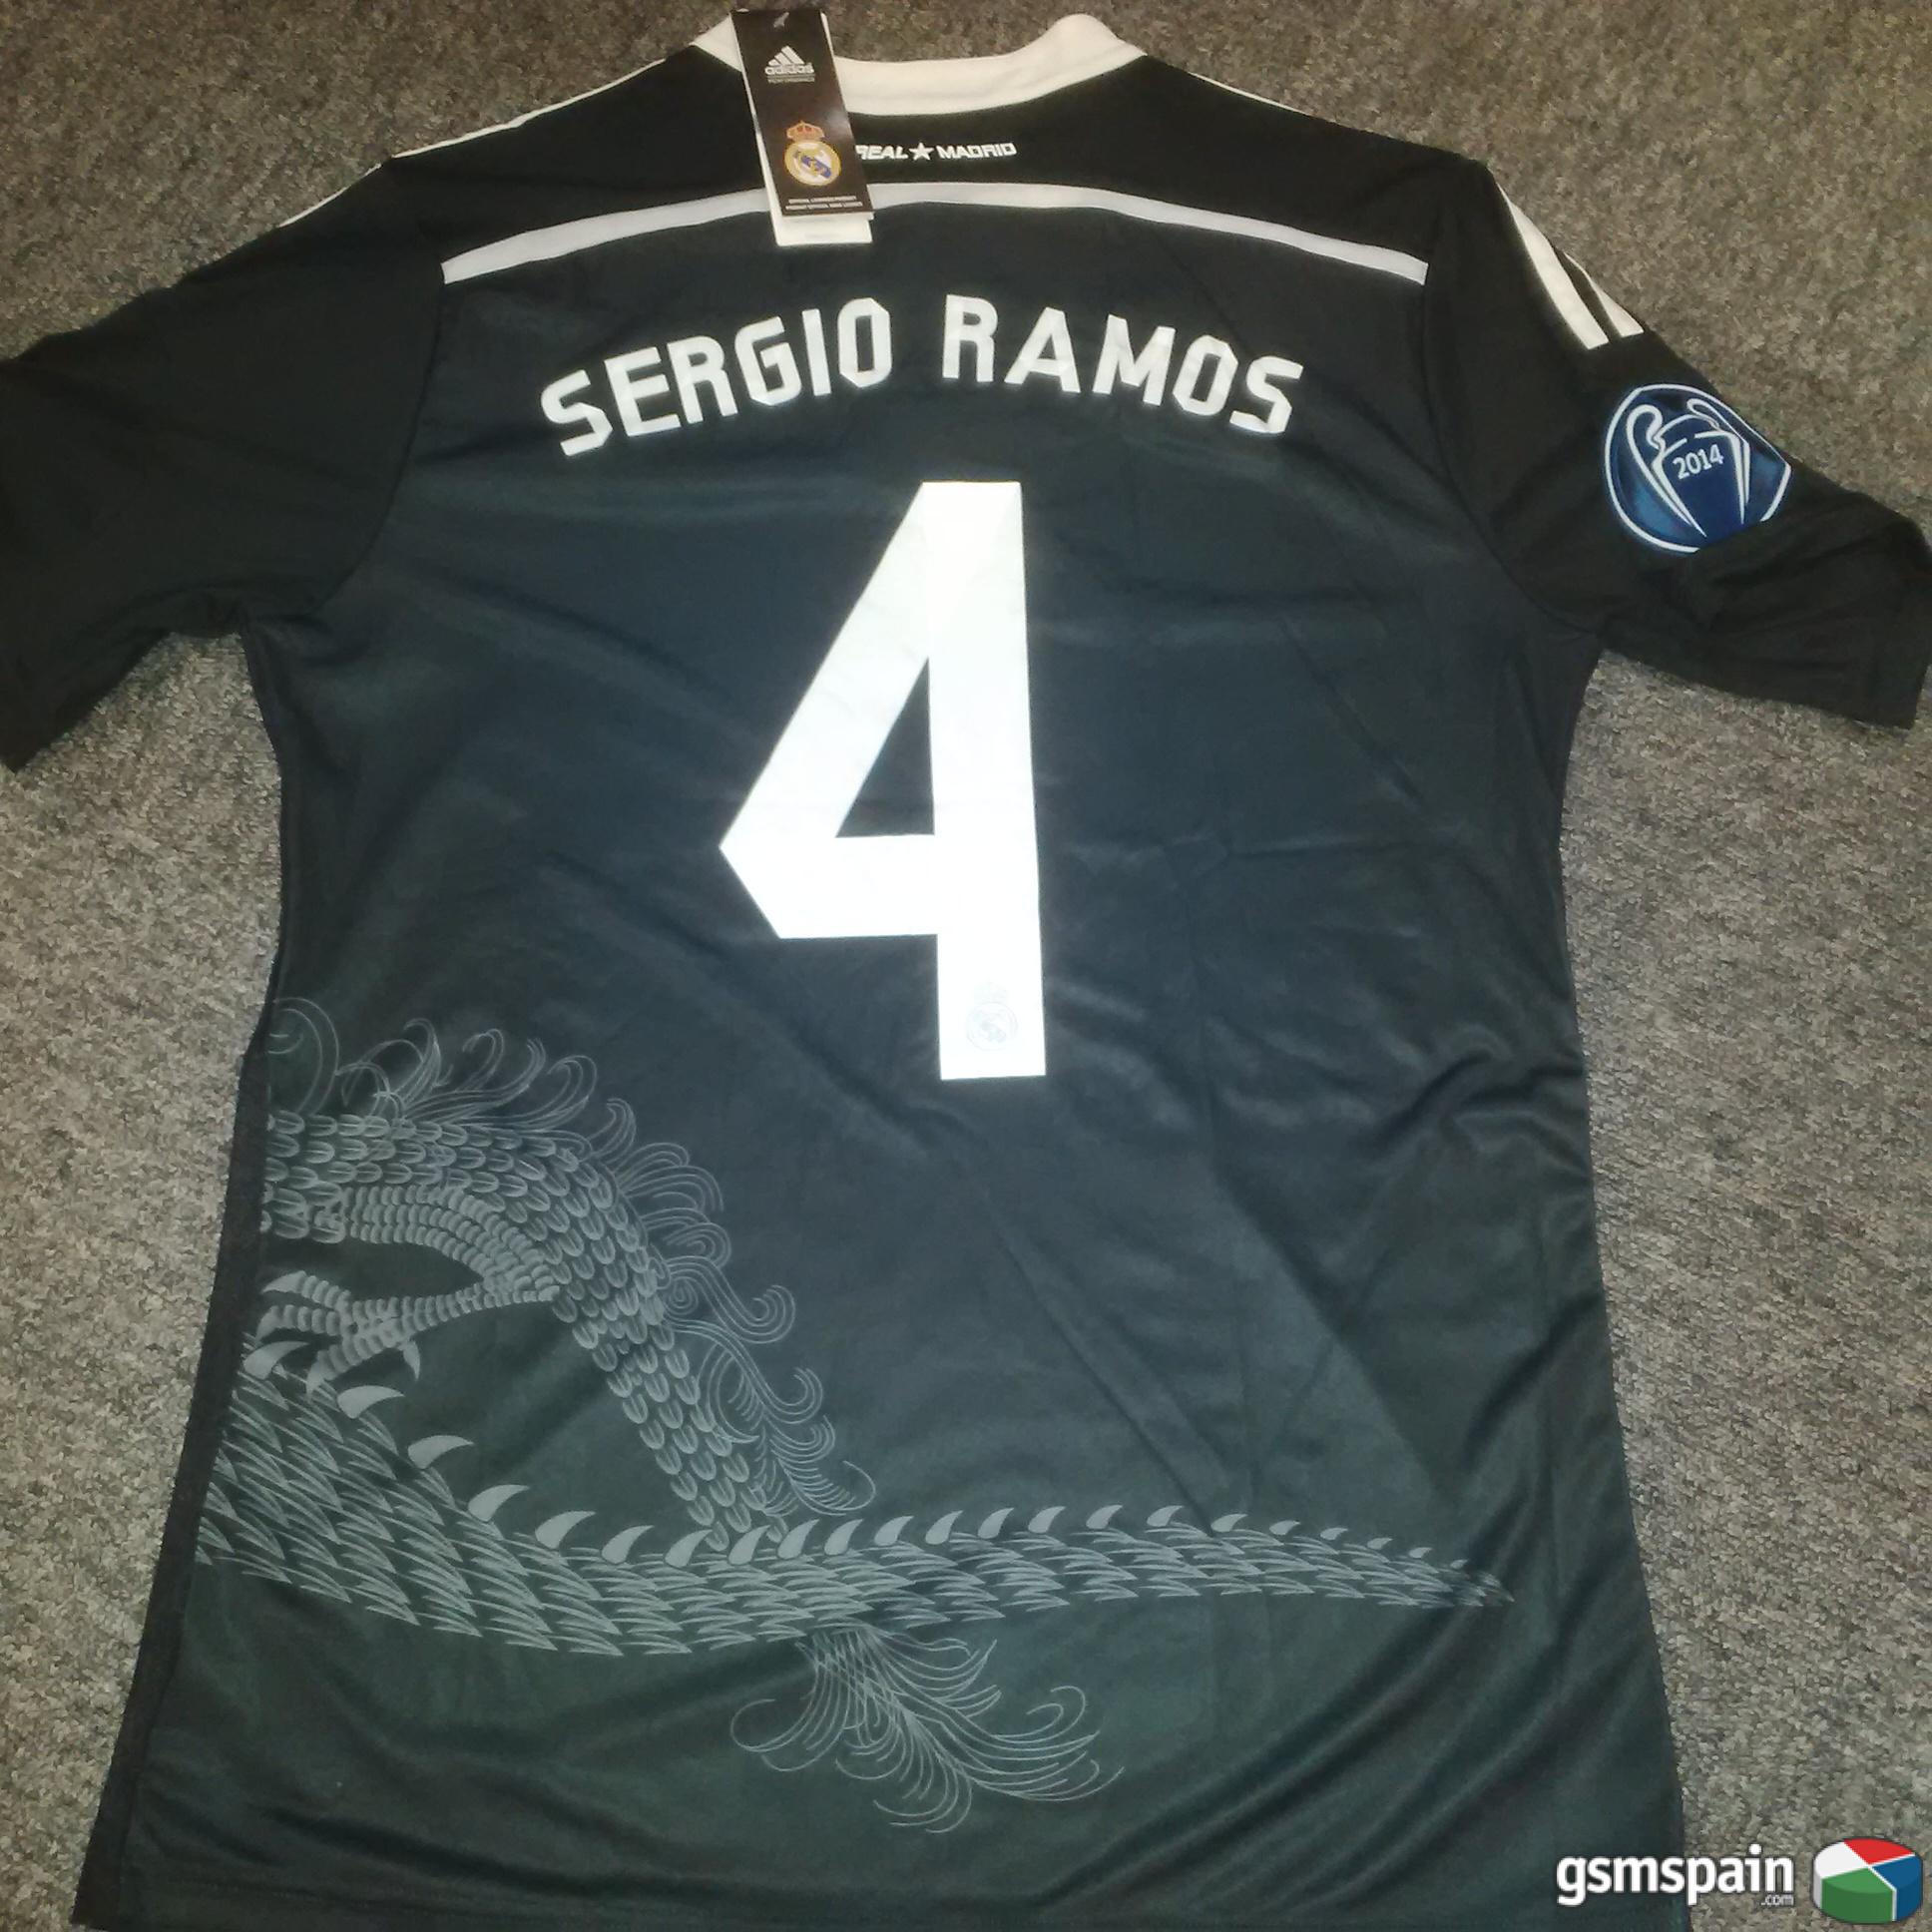 [VENDO] Camiseta Real Madrid Negra, 4.Sergio Ramos, Talla L